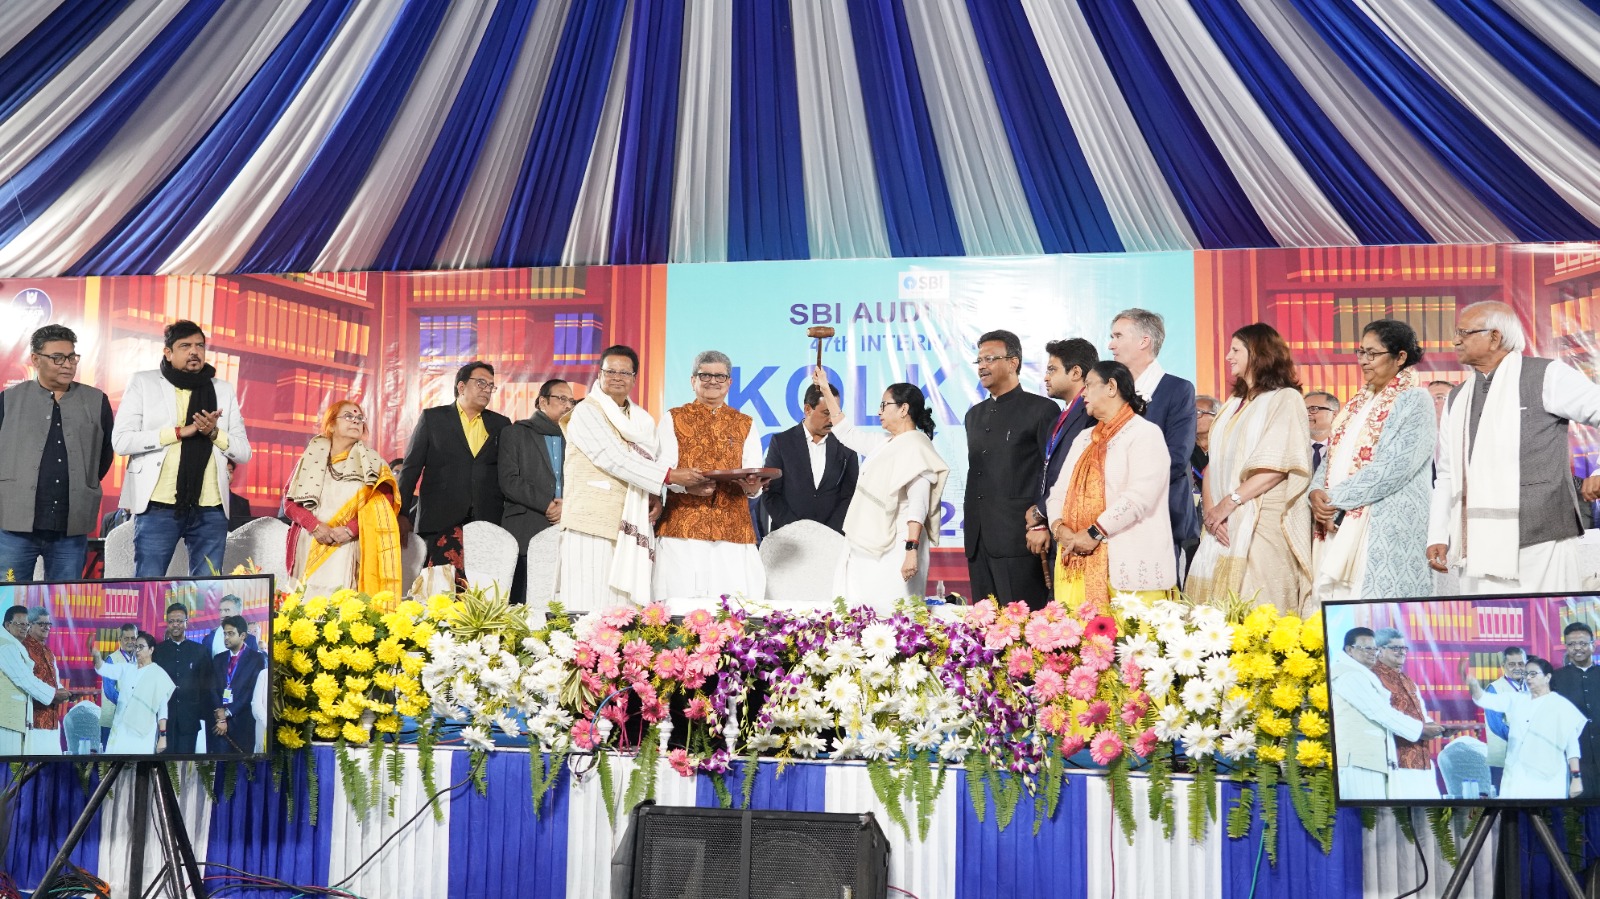 CM, of West Bengal Smt. Mamata Banerjee inaugurated the 47th International Kolkata Book Fair.